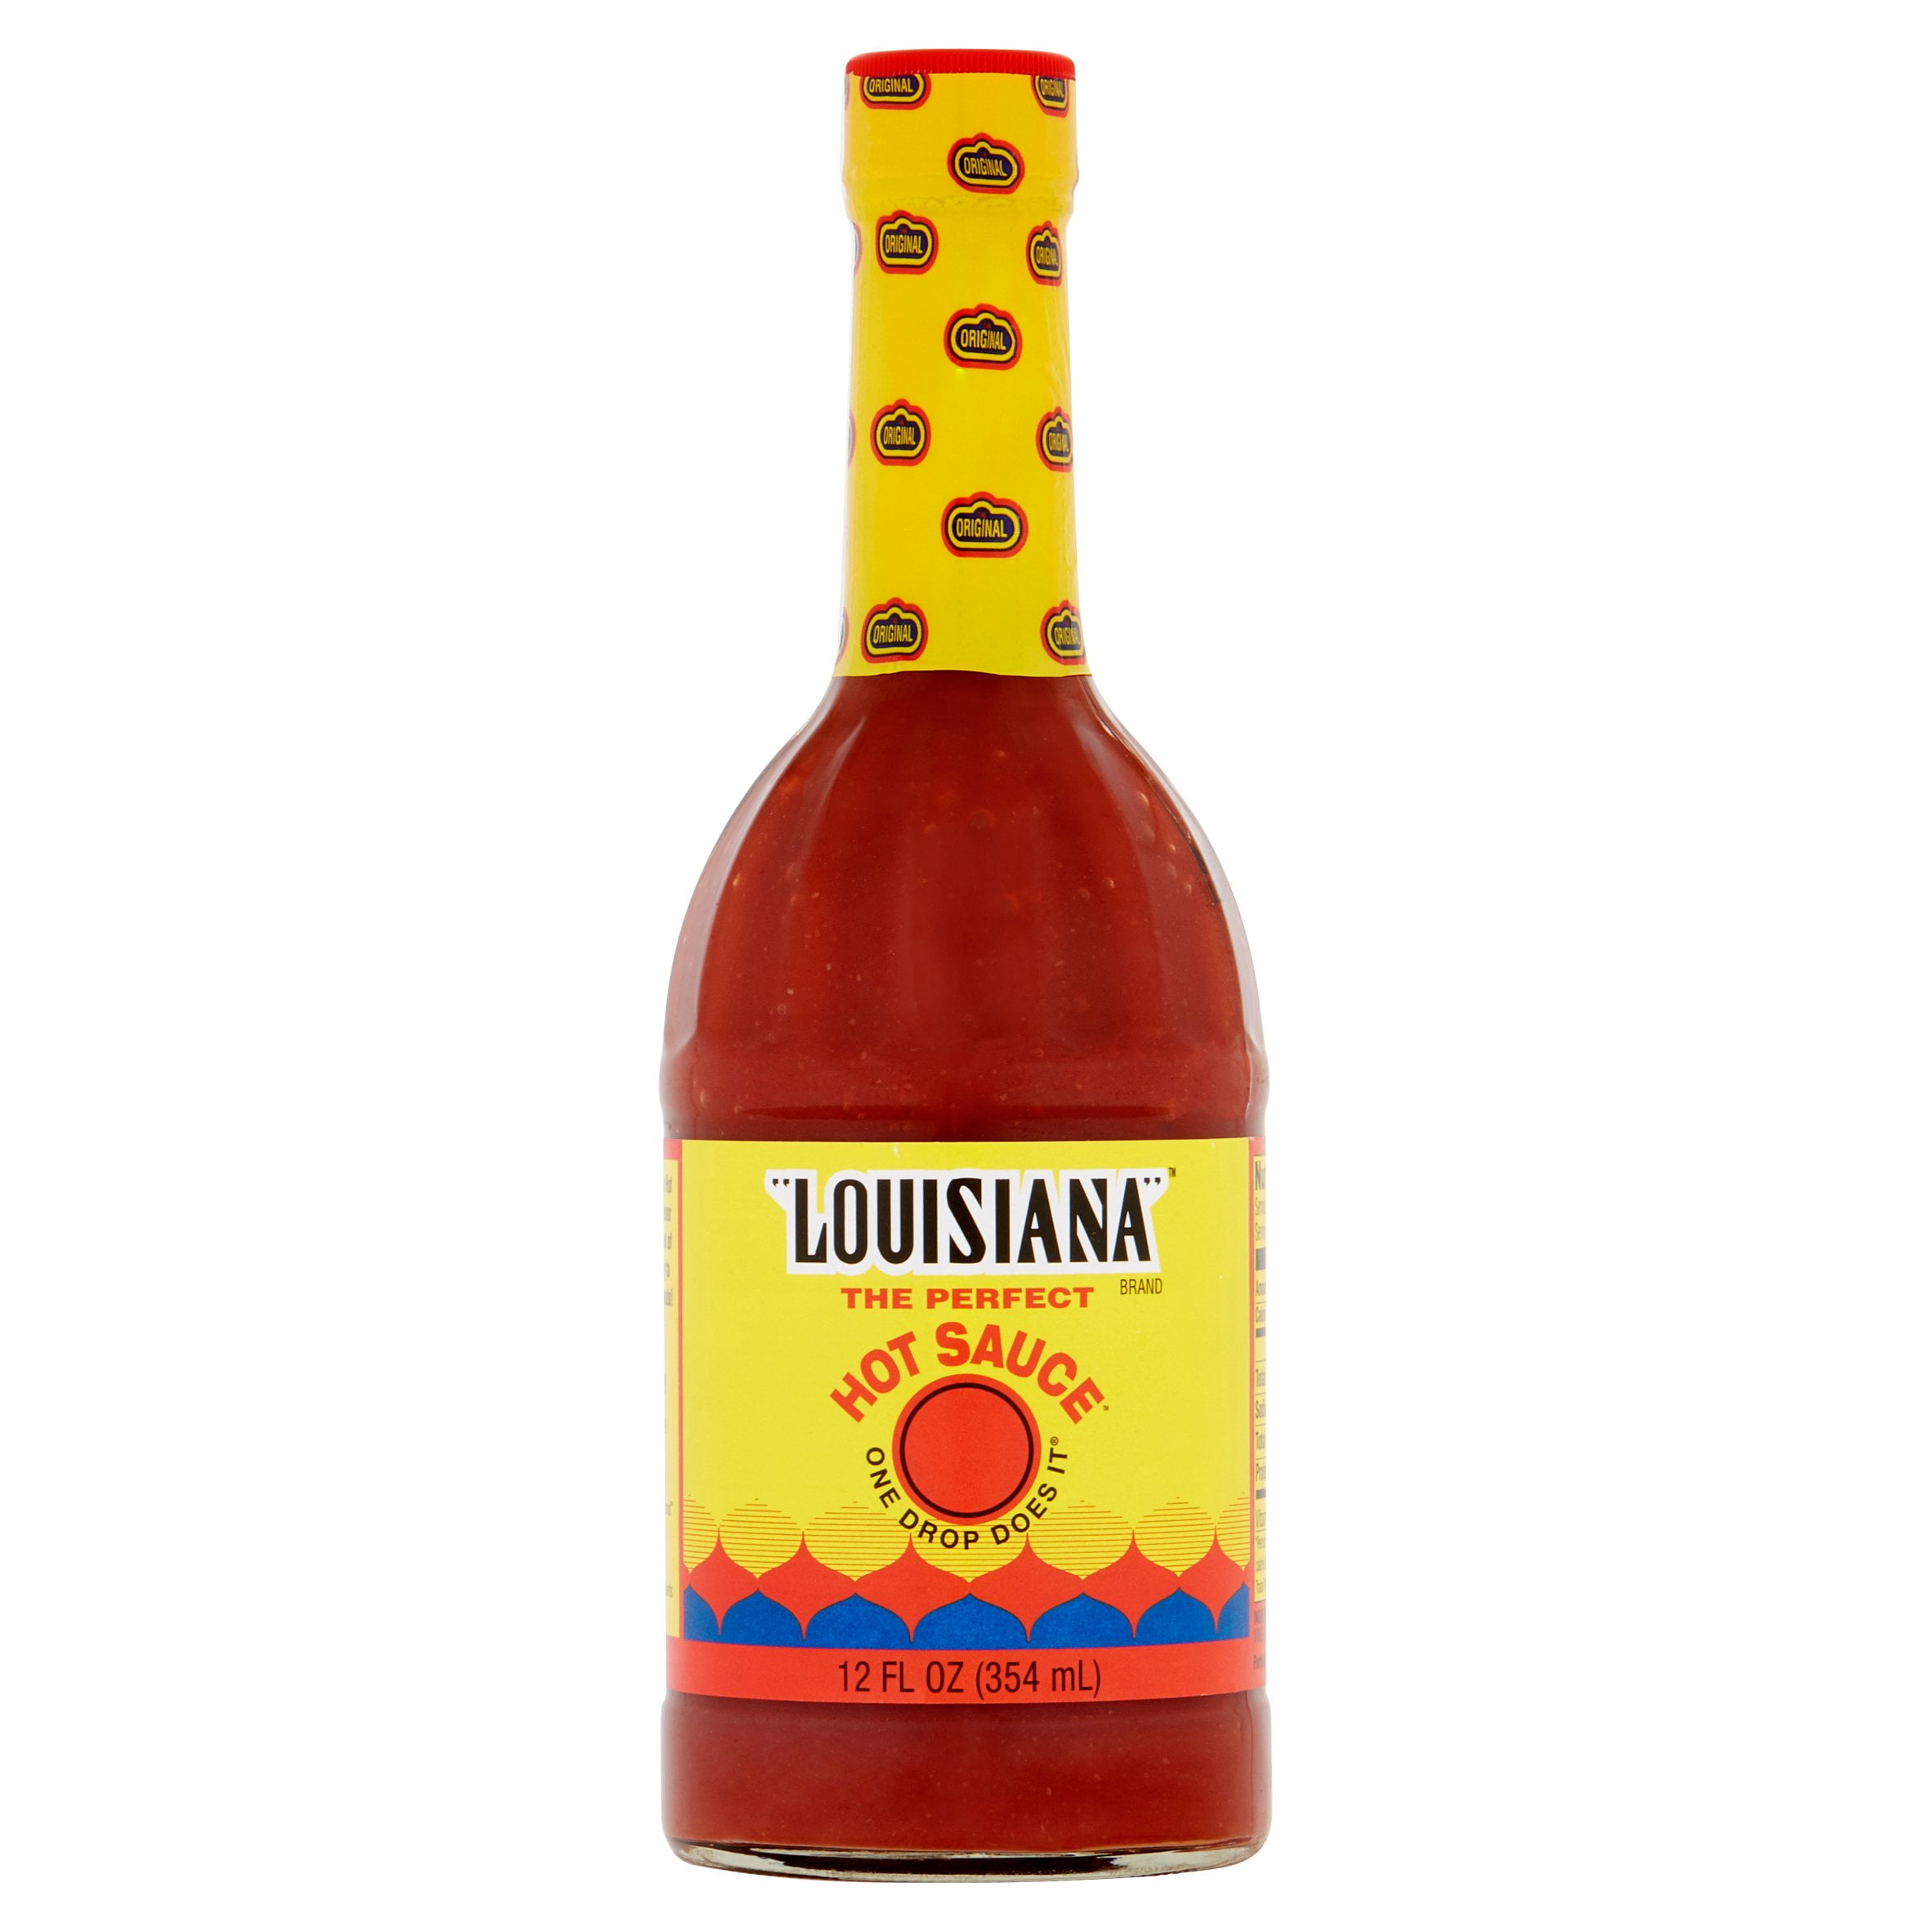 Louisiana Brand Hot Sauce review! Battle of the Louisiana hot